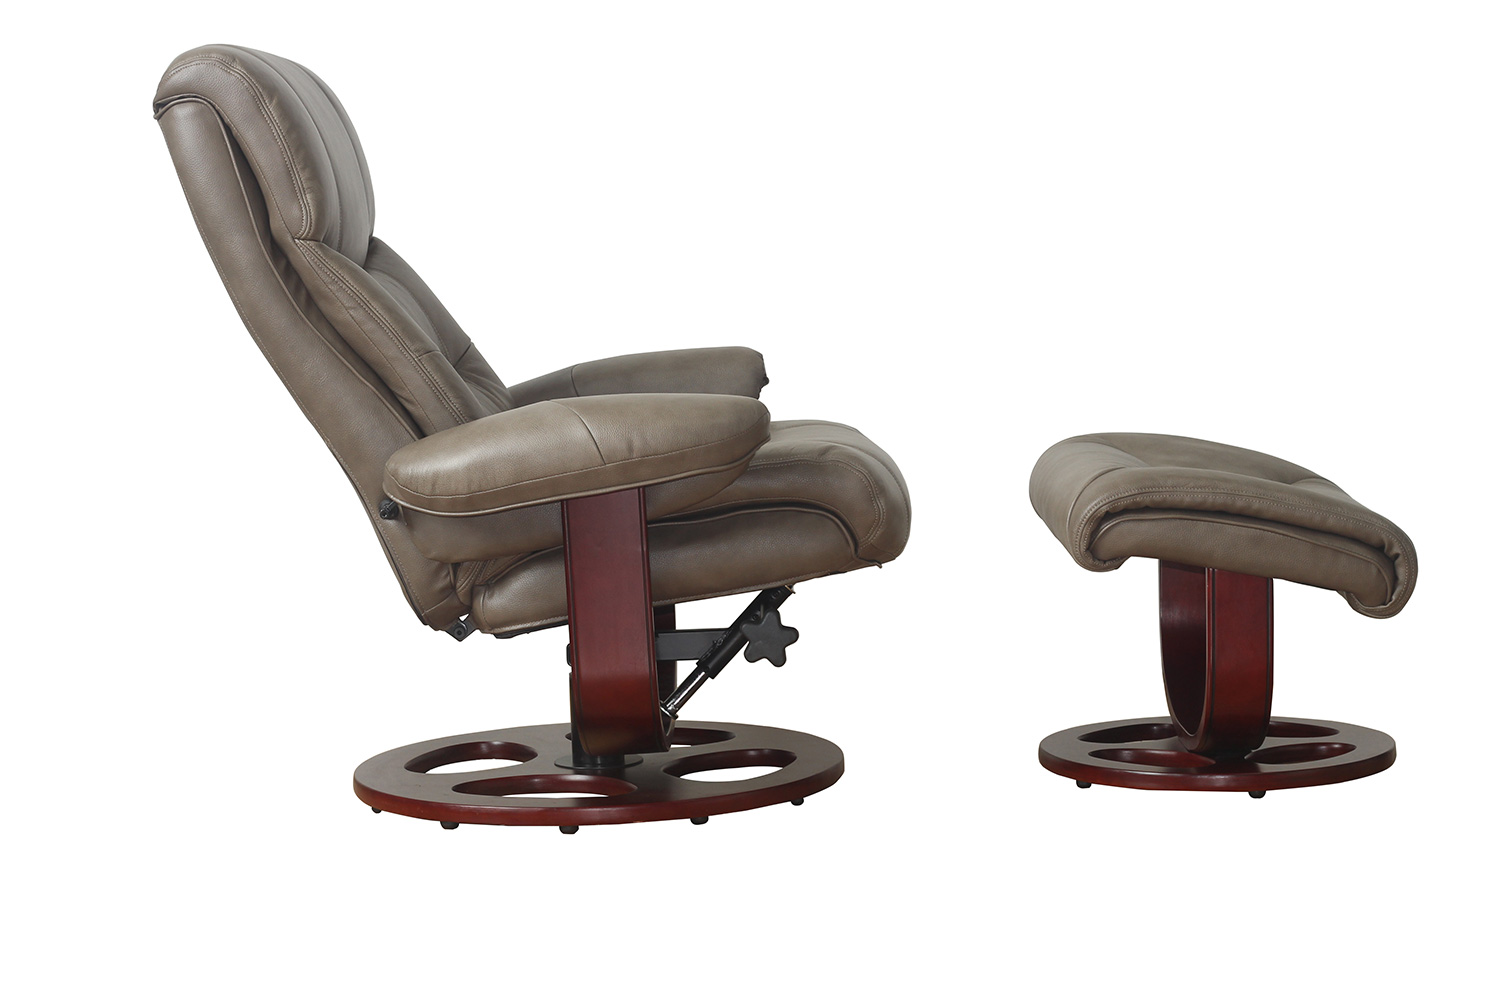 Barcalounger Dawson Pedestal Recliner Chair and Ottoman - Chelsea Cobblestone/Leather Match